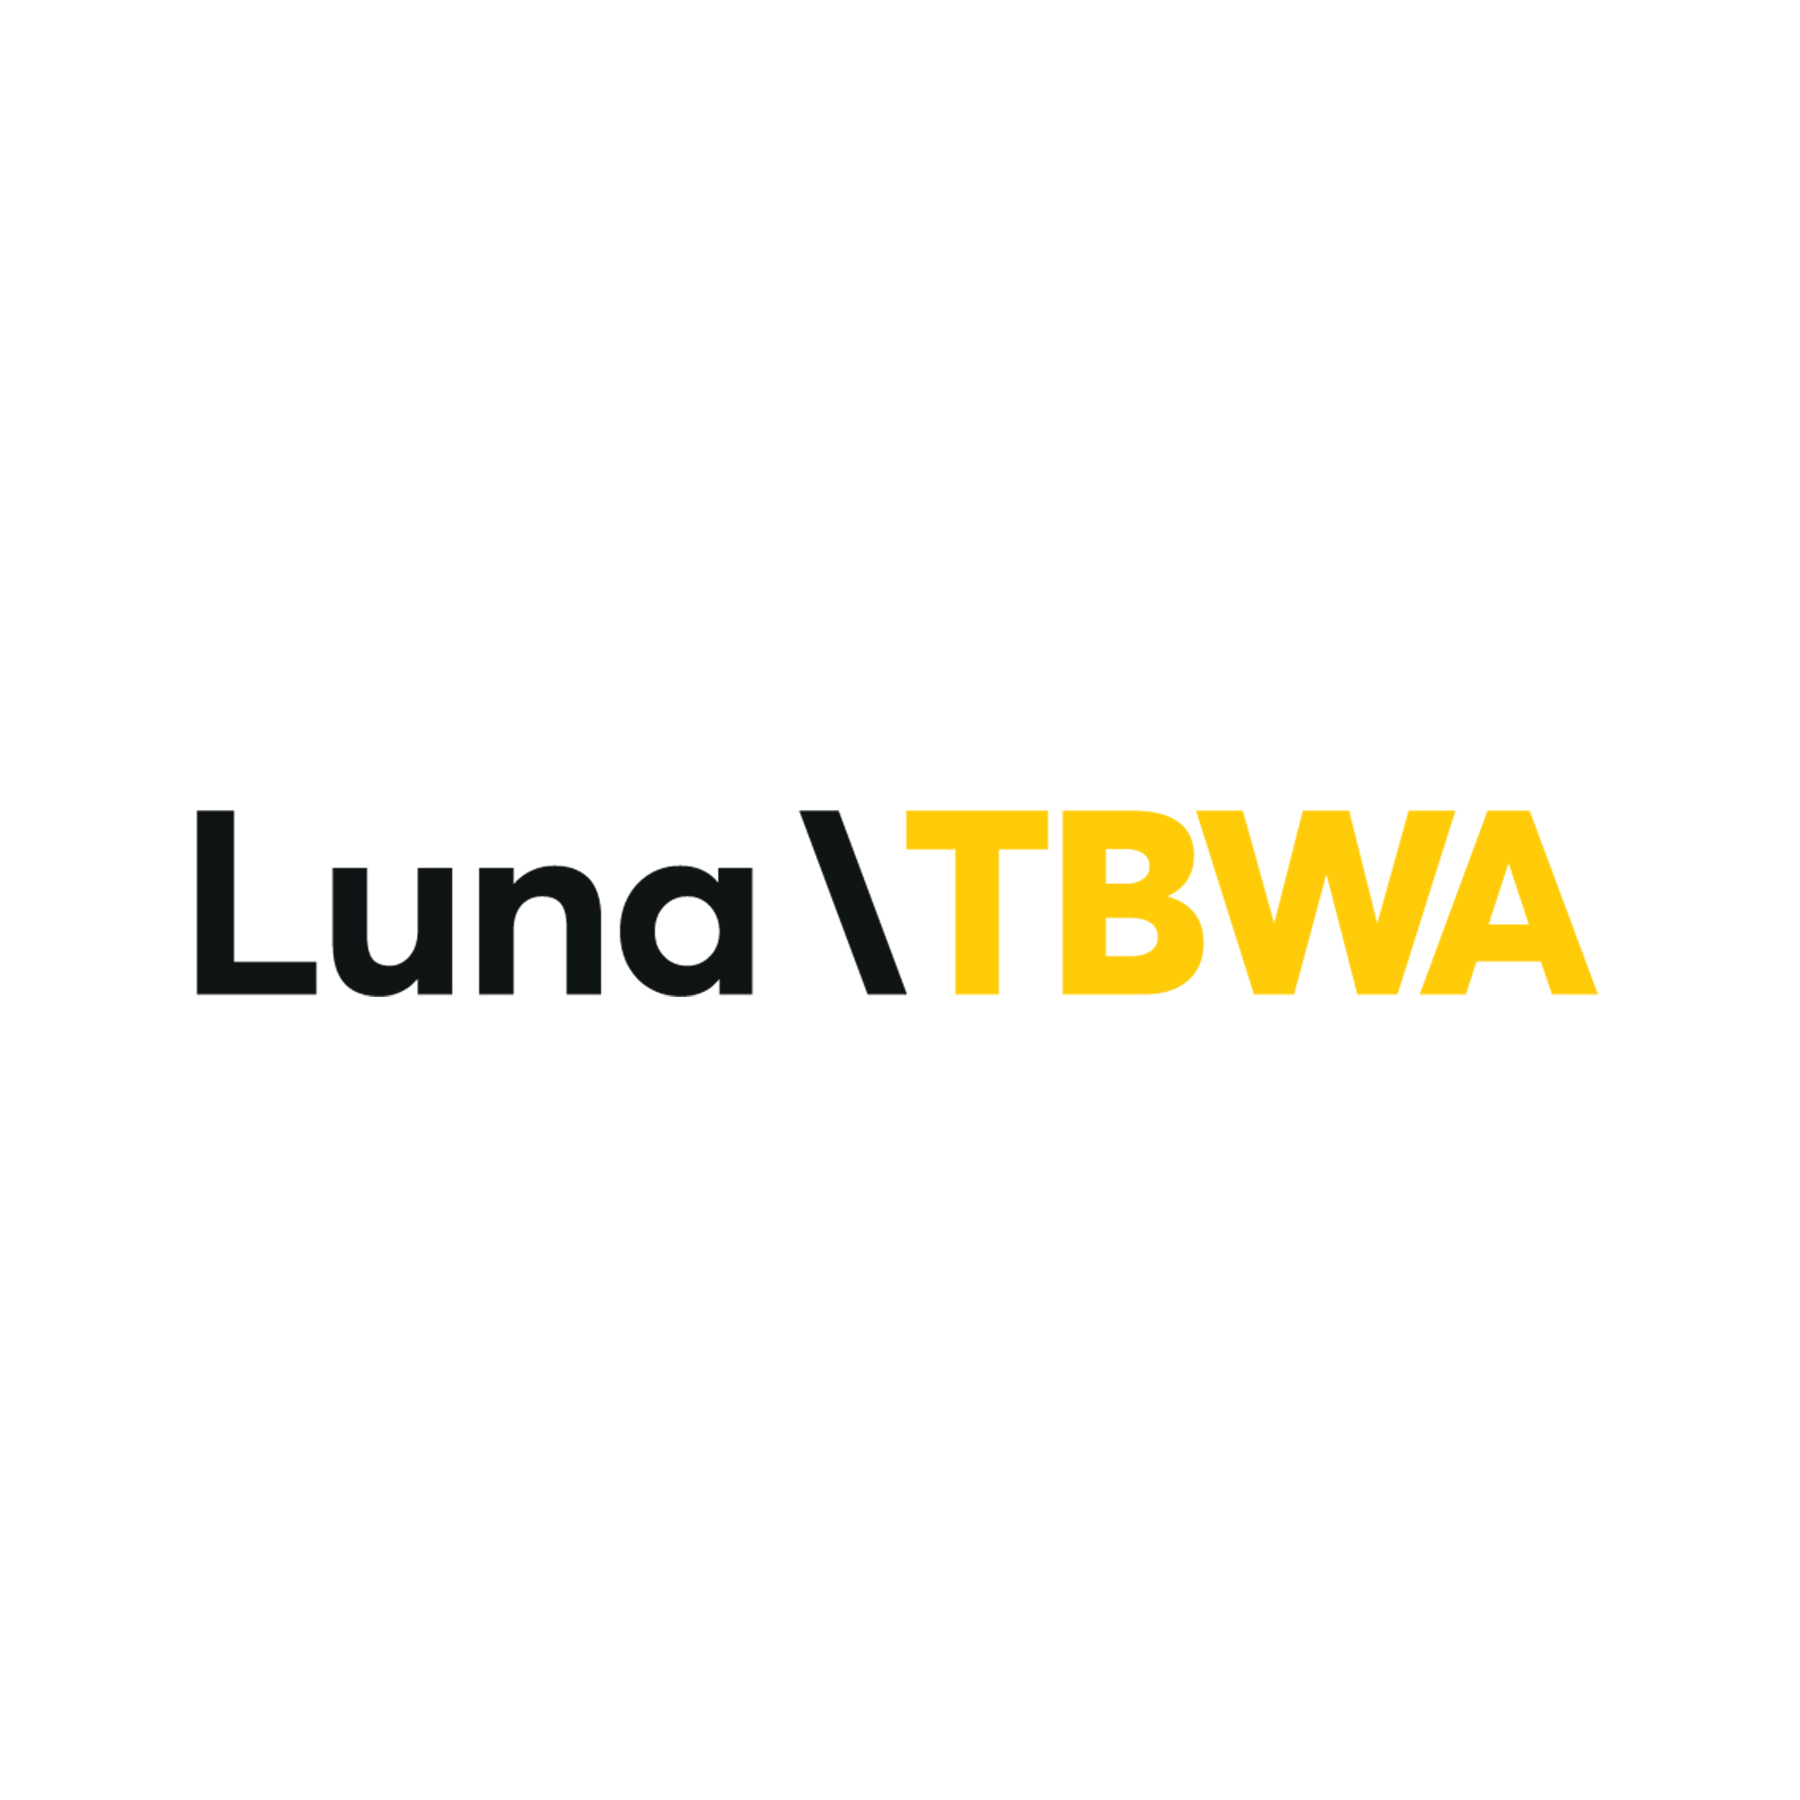 LUNA\TBWA